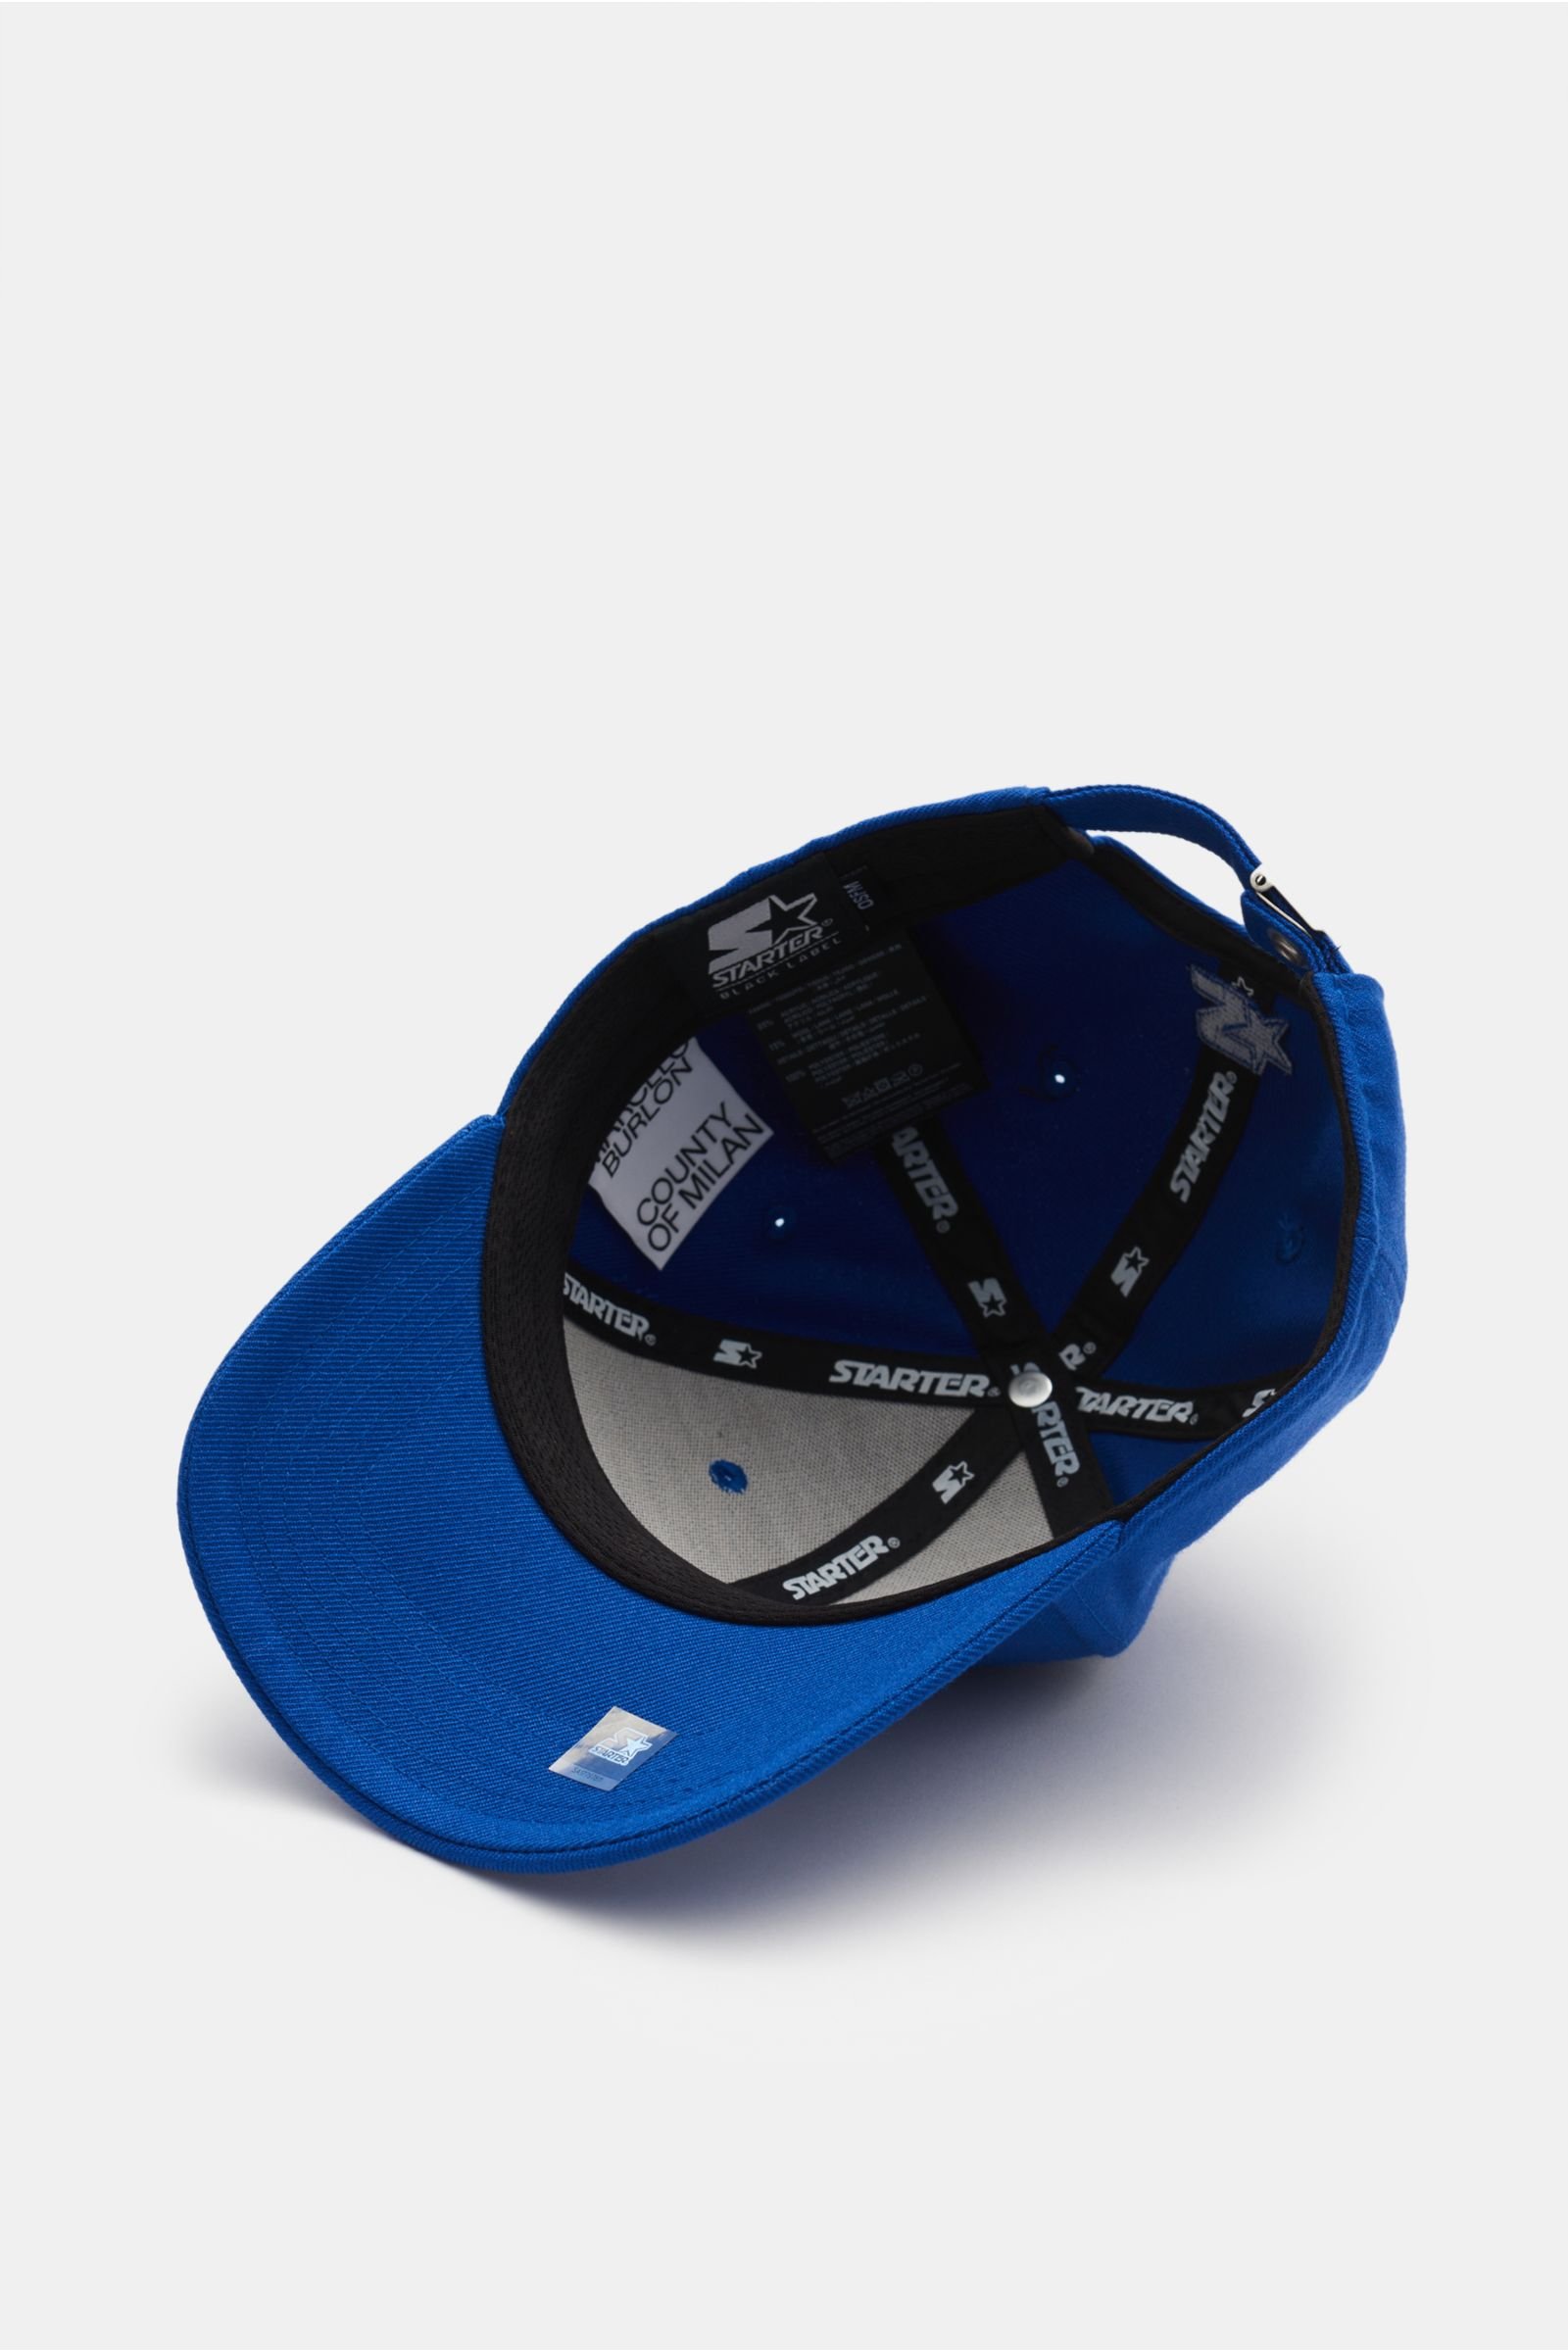 | BURLON Hamburg BRAUN baseball MARCELO \'Cross\' blue cap